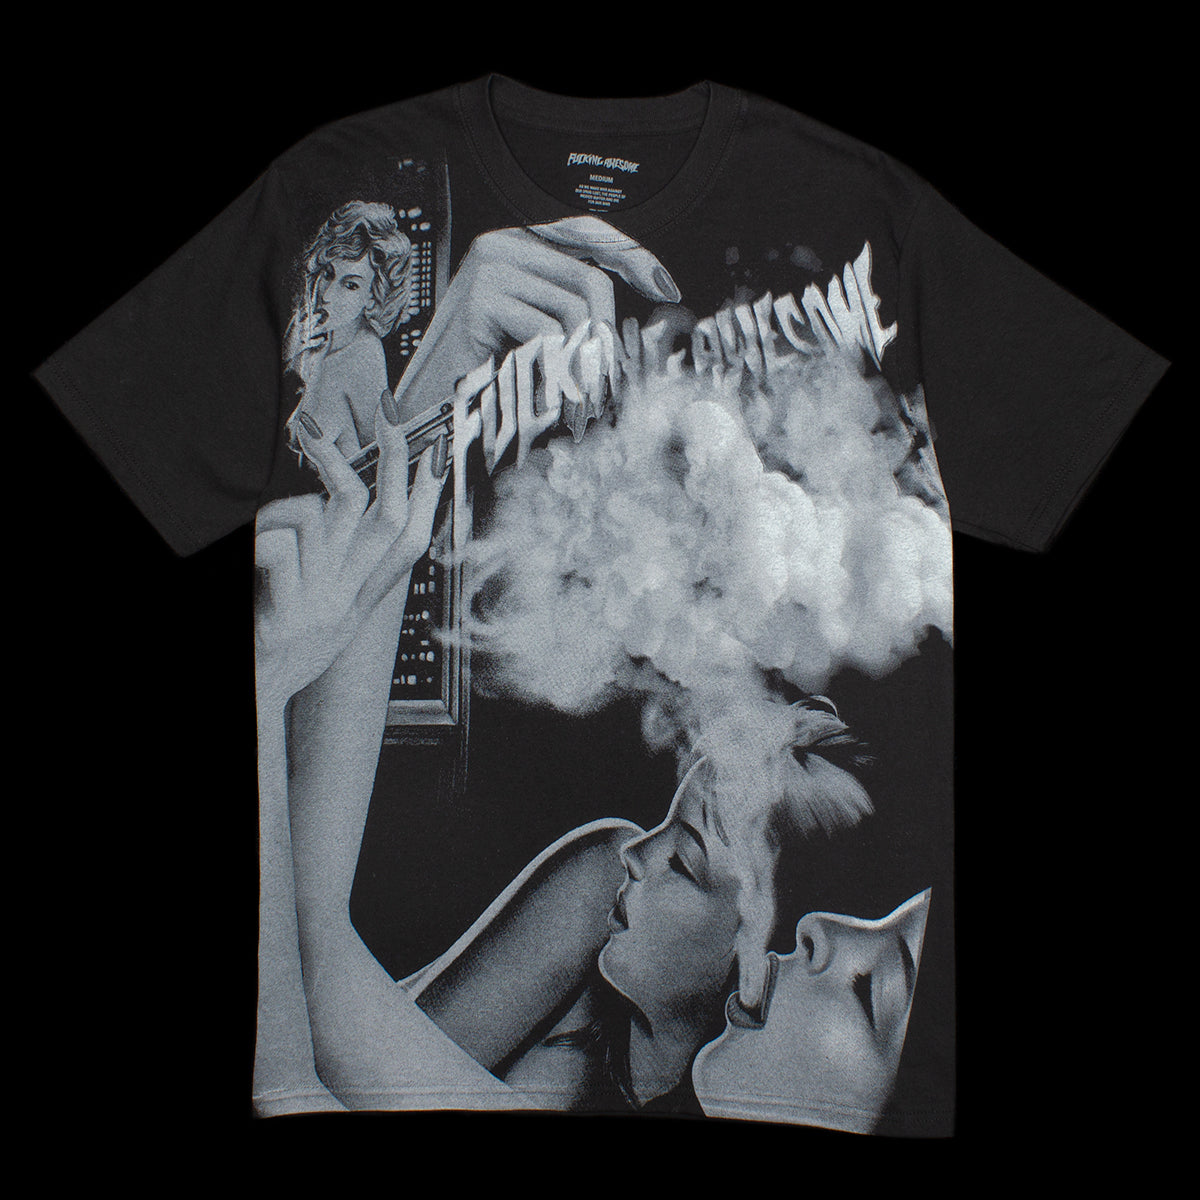 Smoke T-Shirt